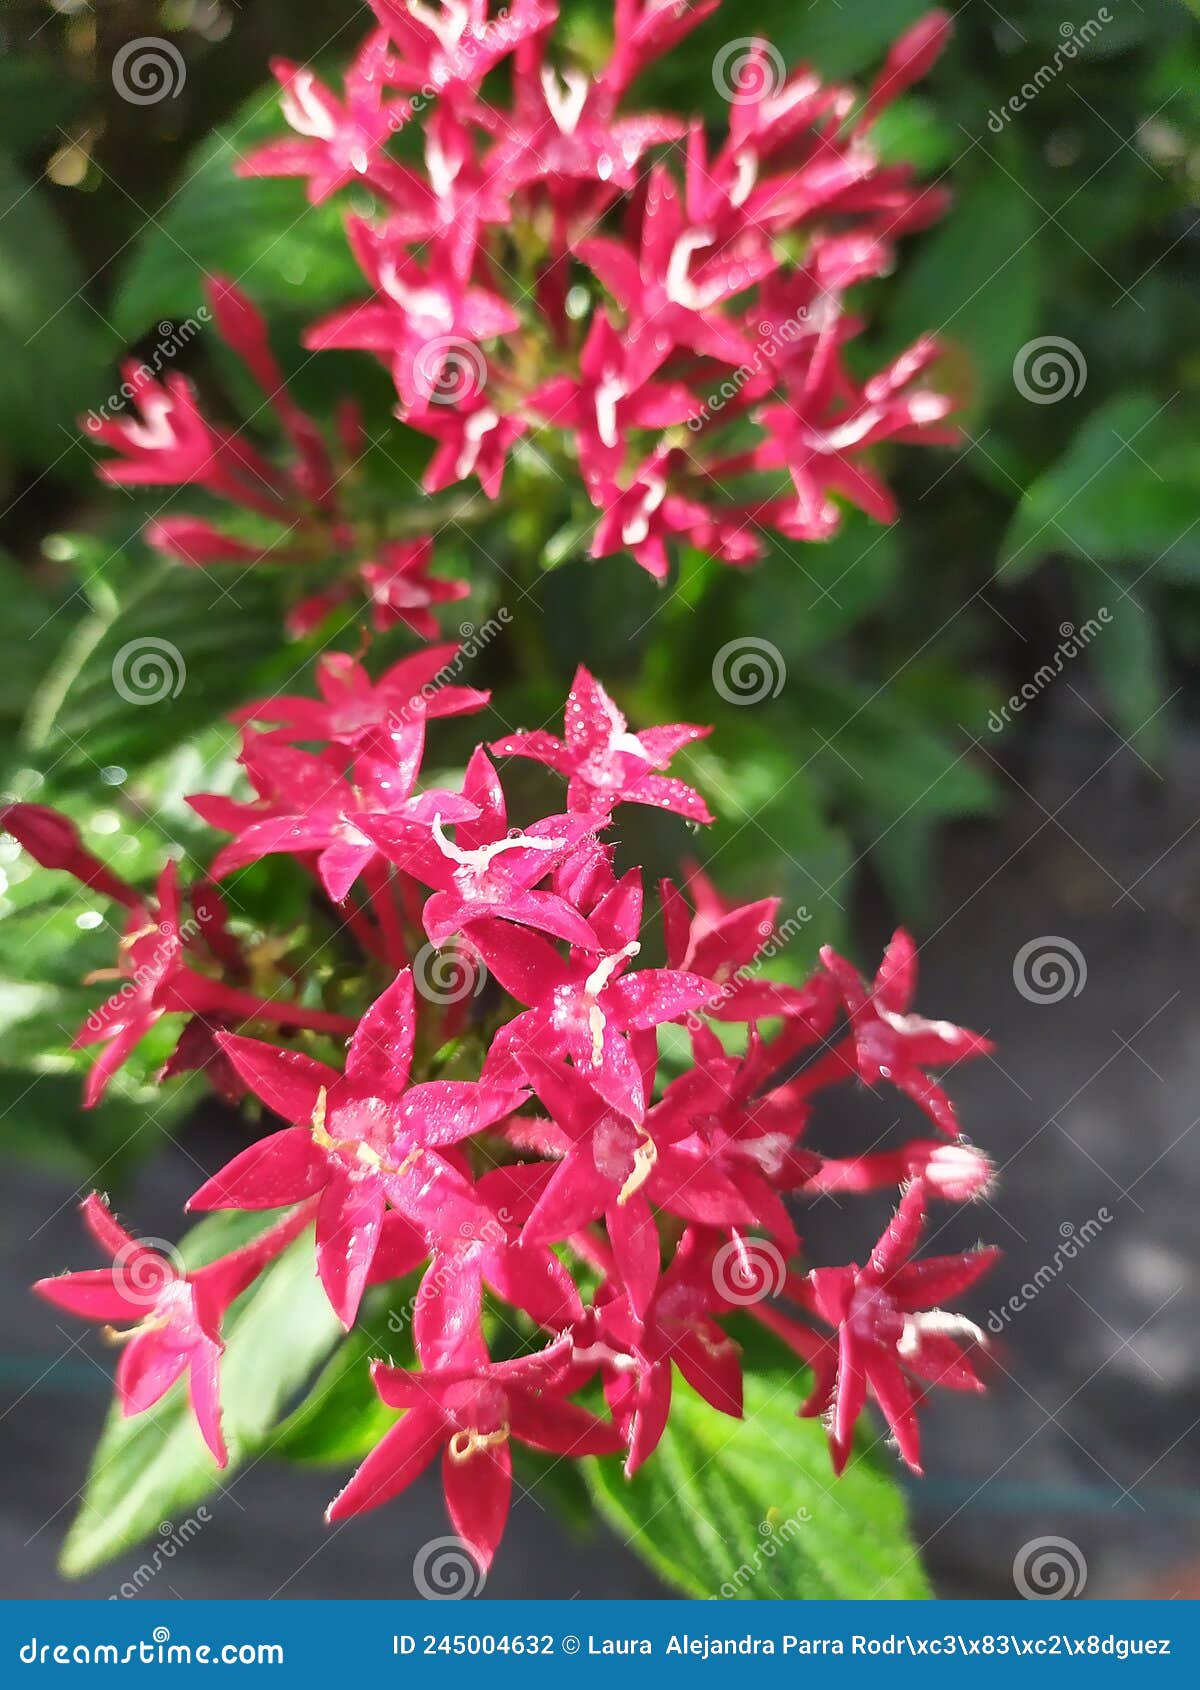 detail of a group of red lucky star flowers. detalle de un grupo de flores pentas de color rojo